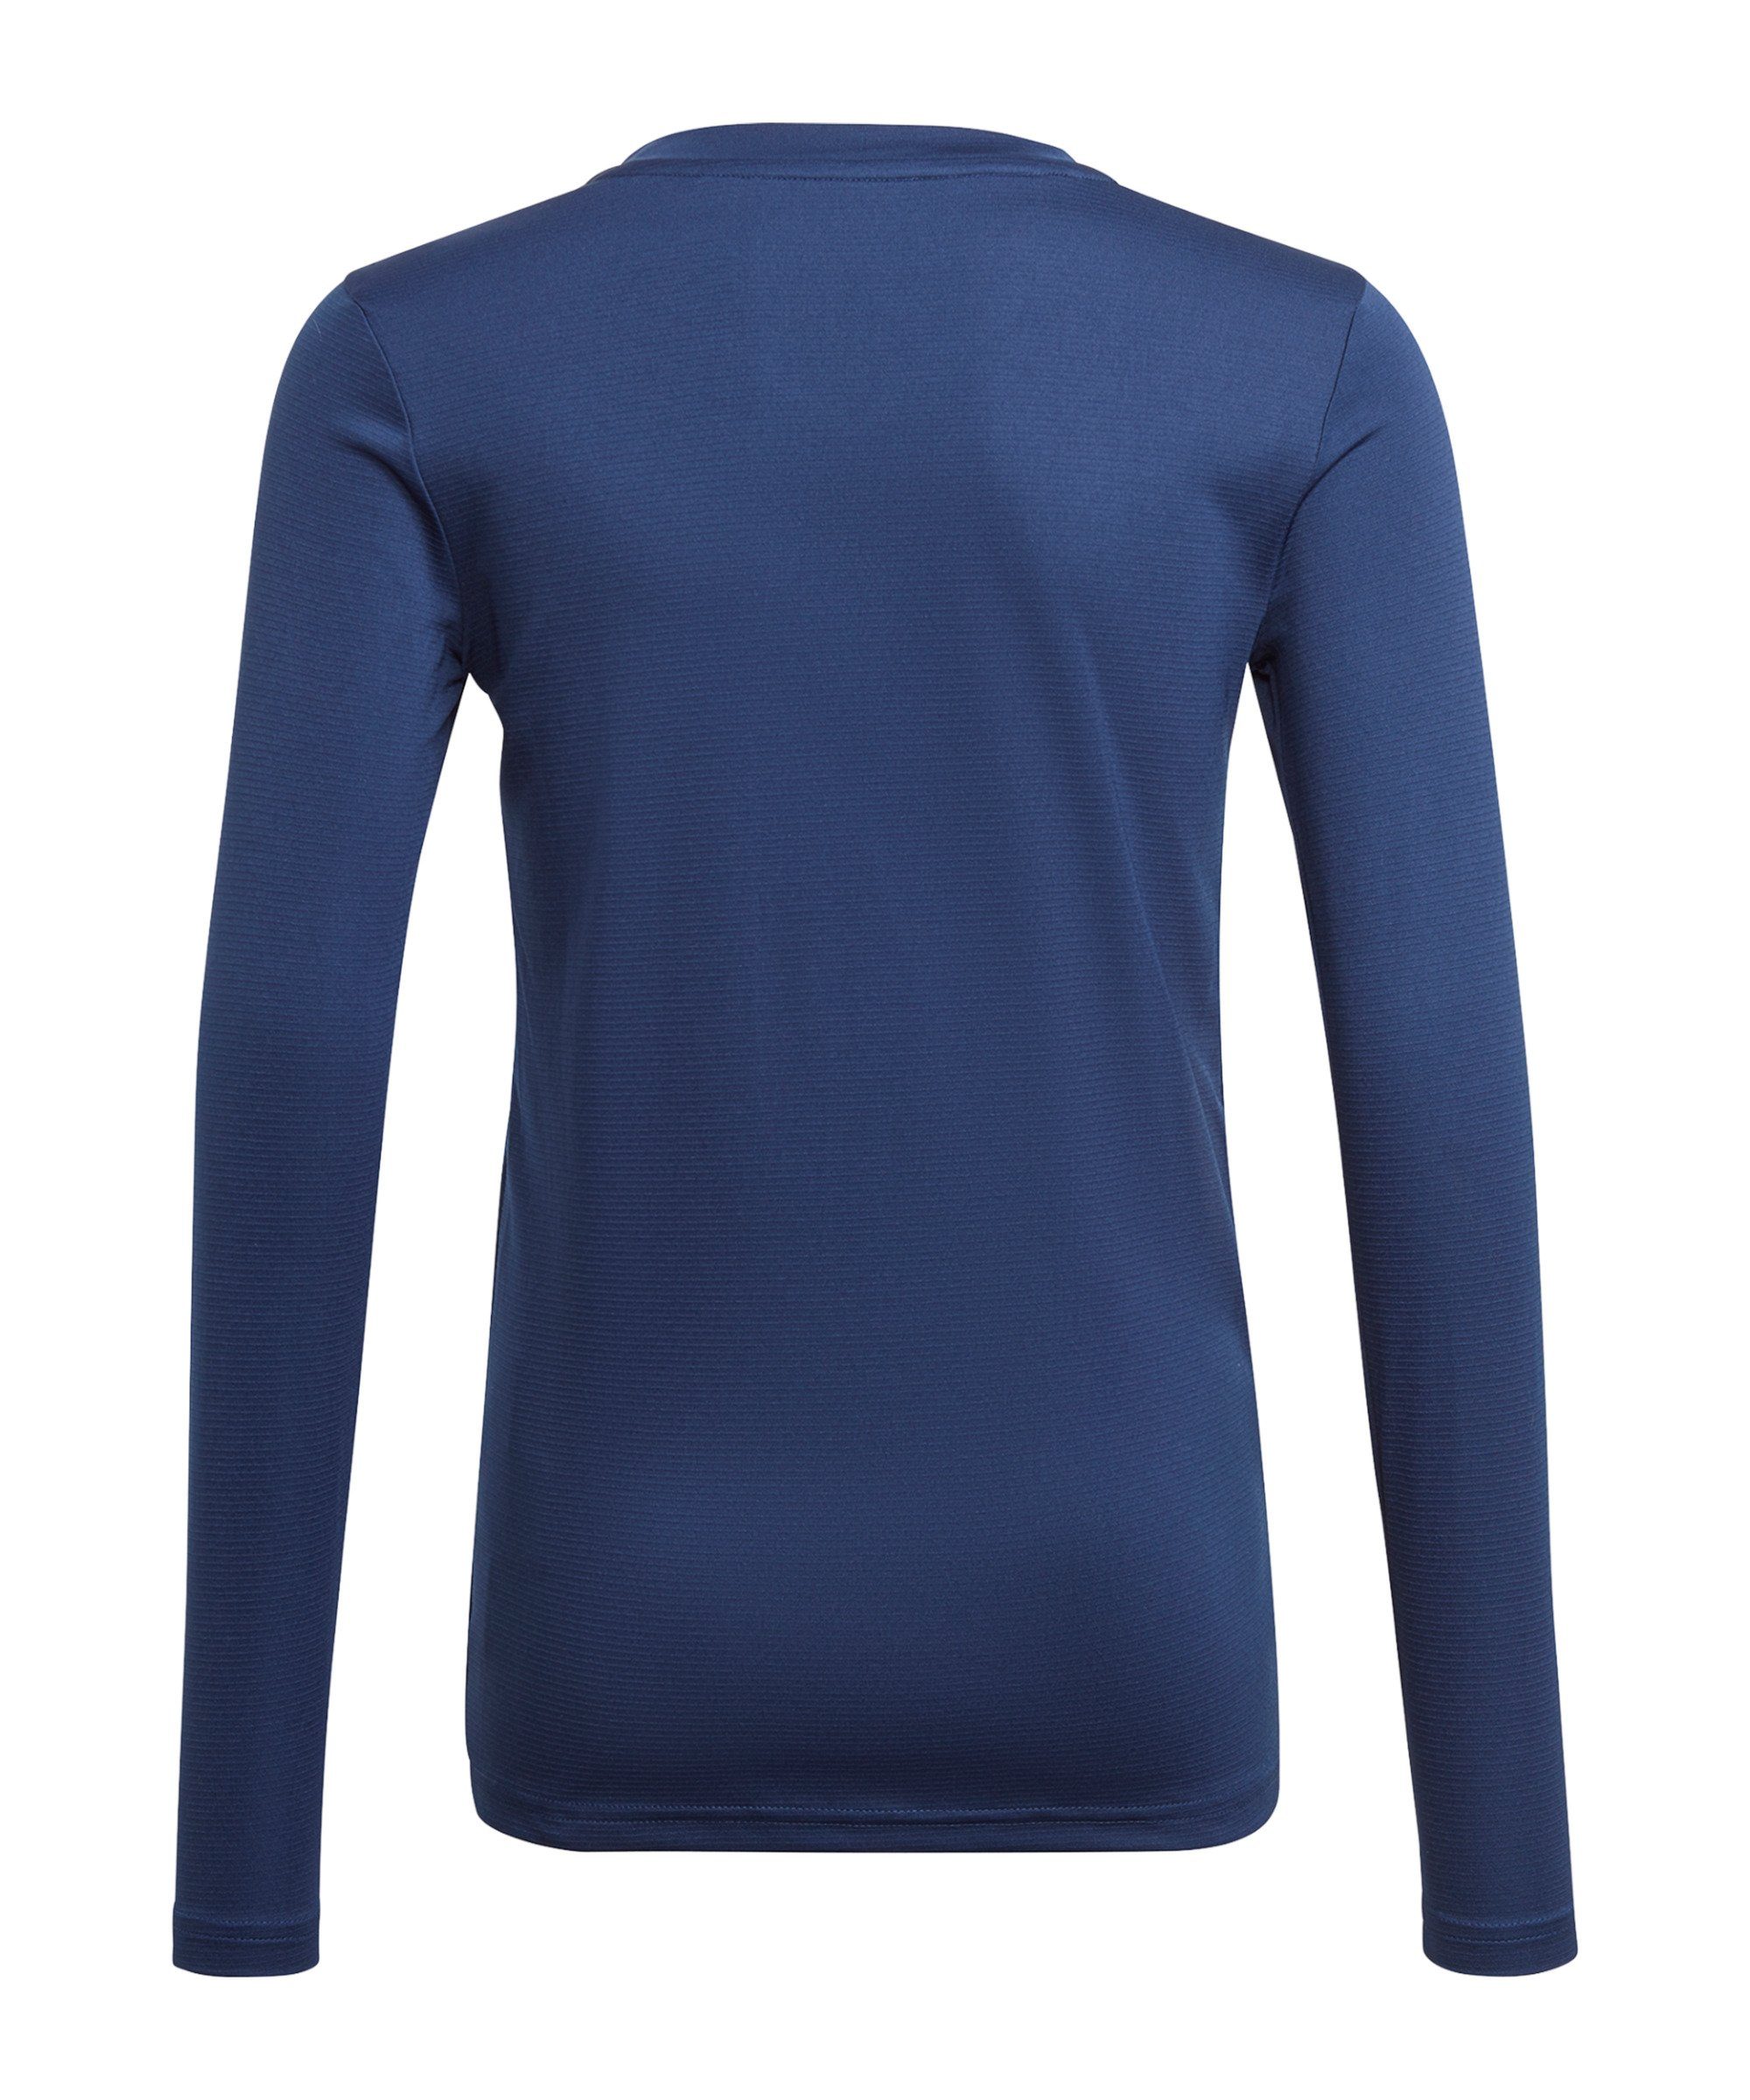 default Base Funktionsshirt Dunkel Team adidas Top Performance langarm Kids blaublau